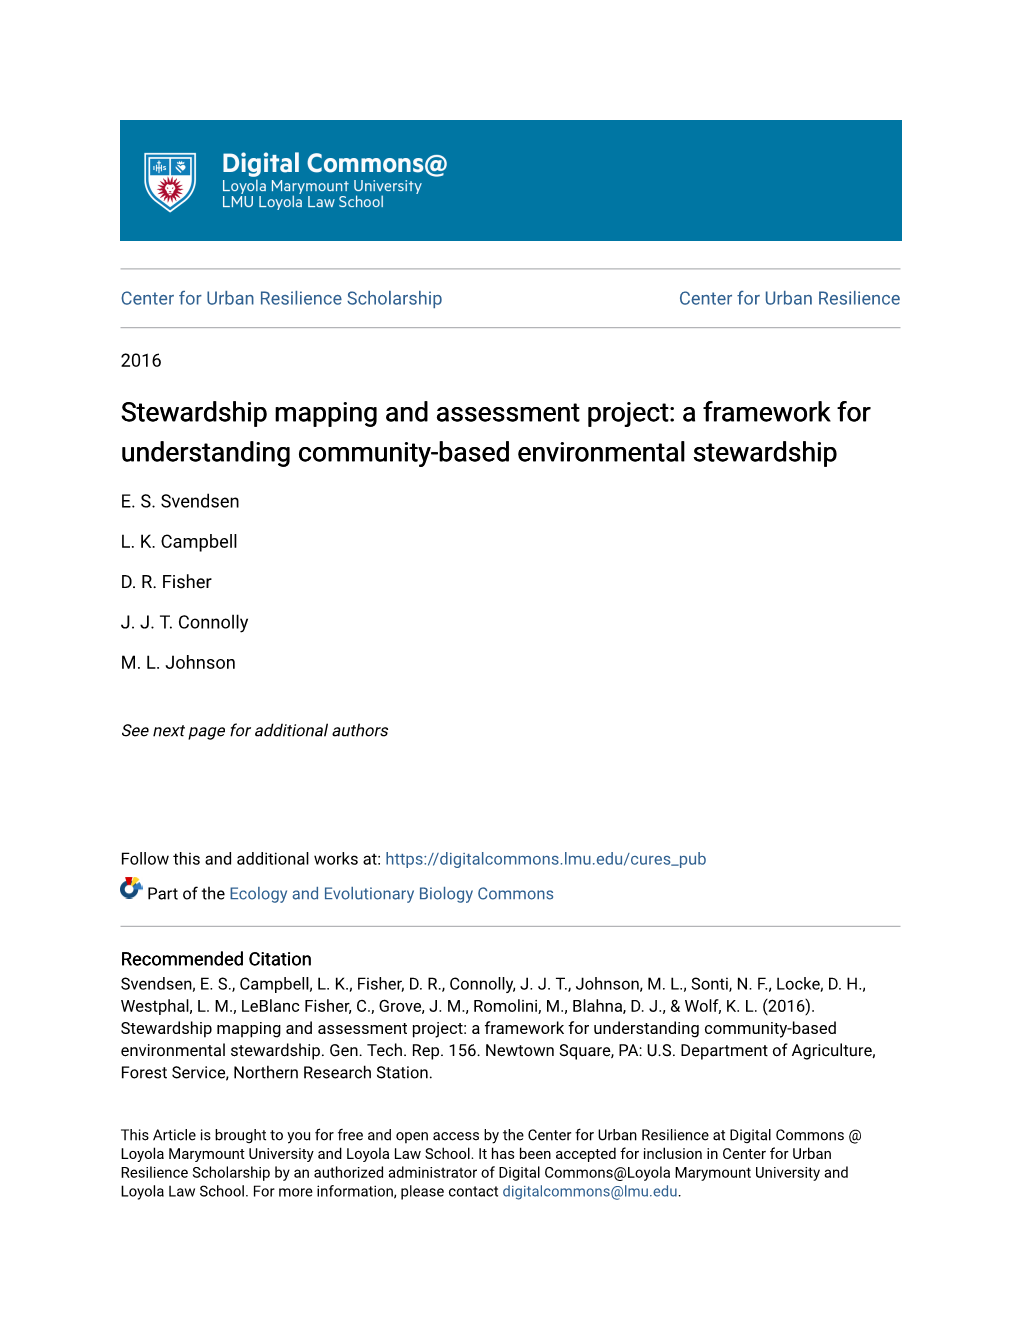 A Framework for Understanding Community-Based Environmental Stewardship